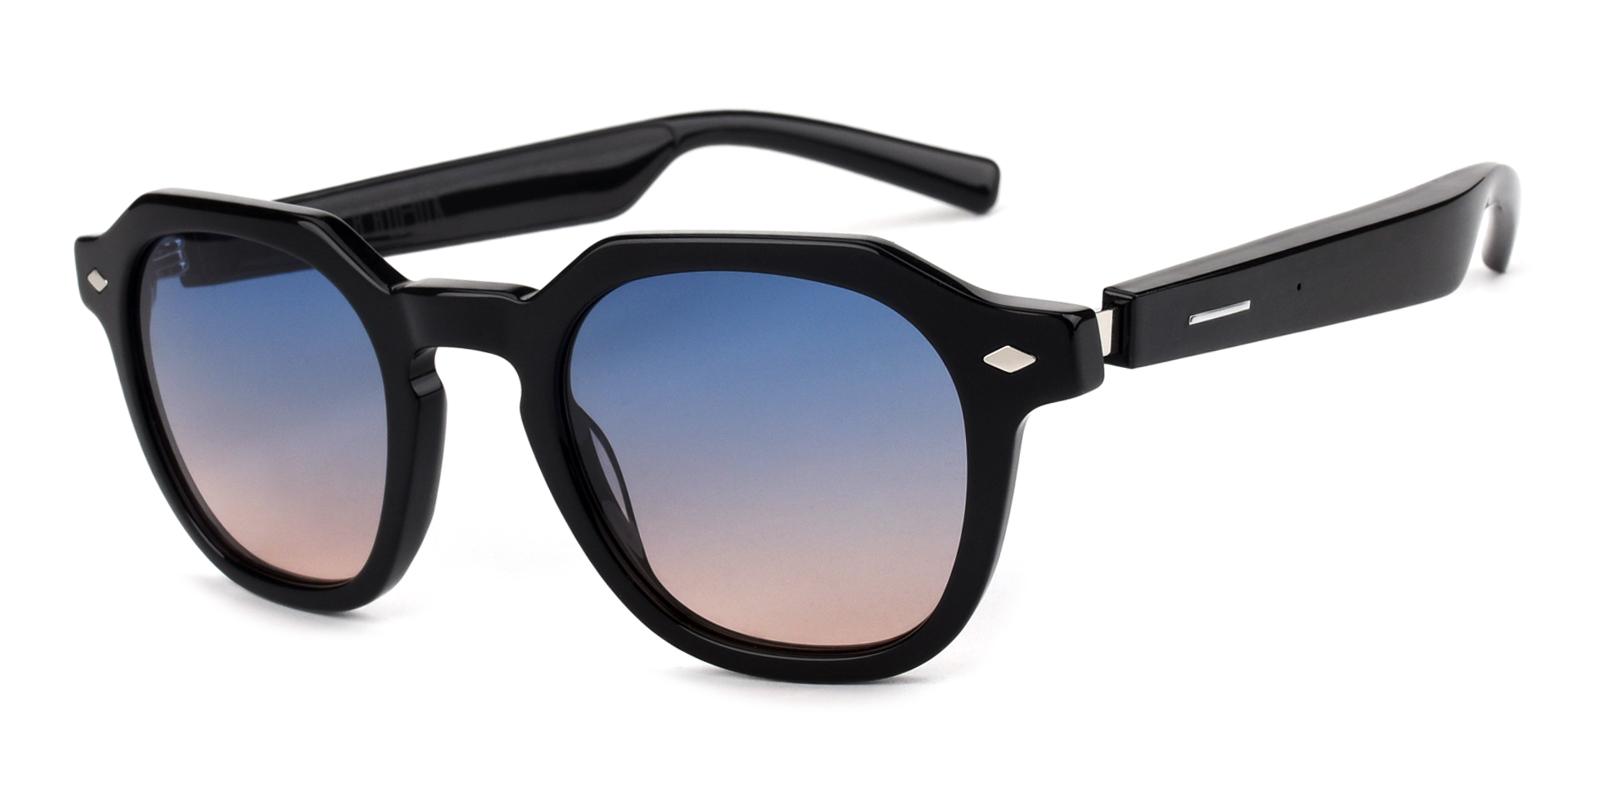 Smart Bluetooth 5.2 Sunglasses-Black-Round-Combination-Sunglasses-detail